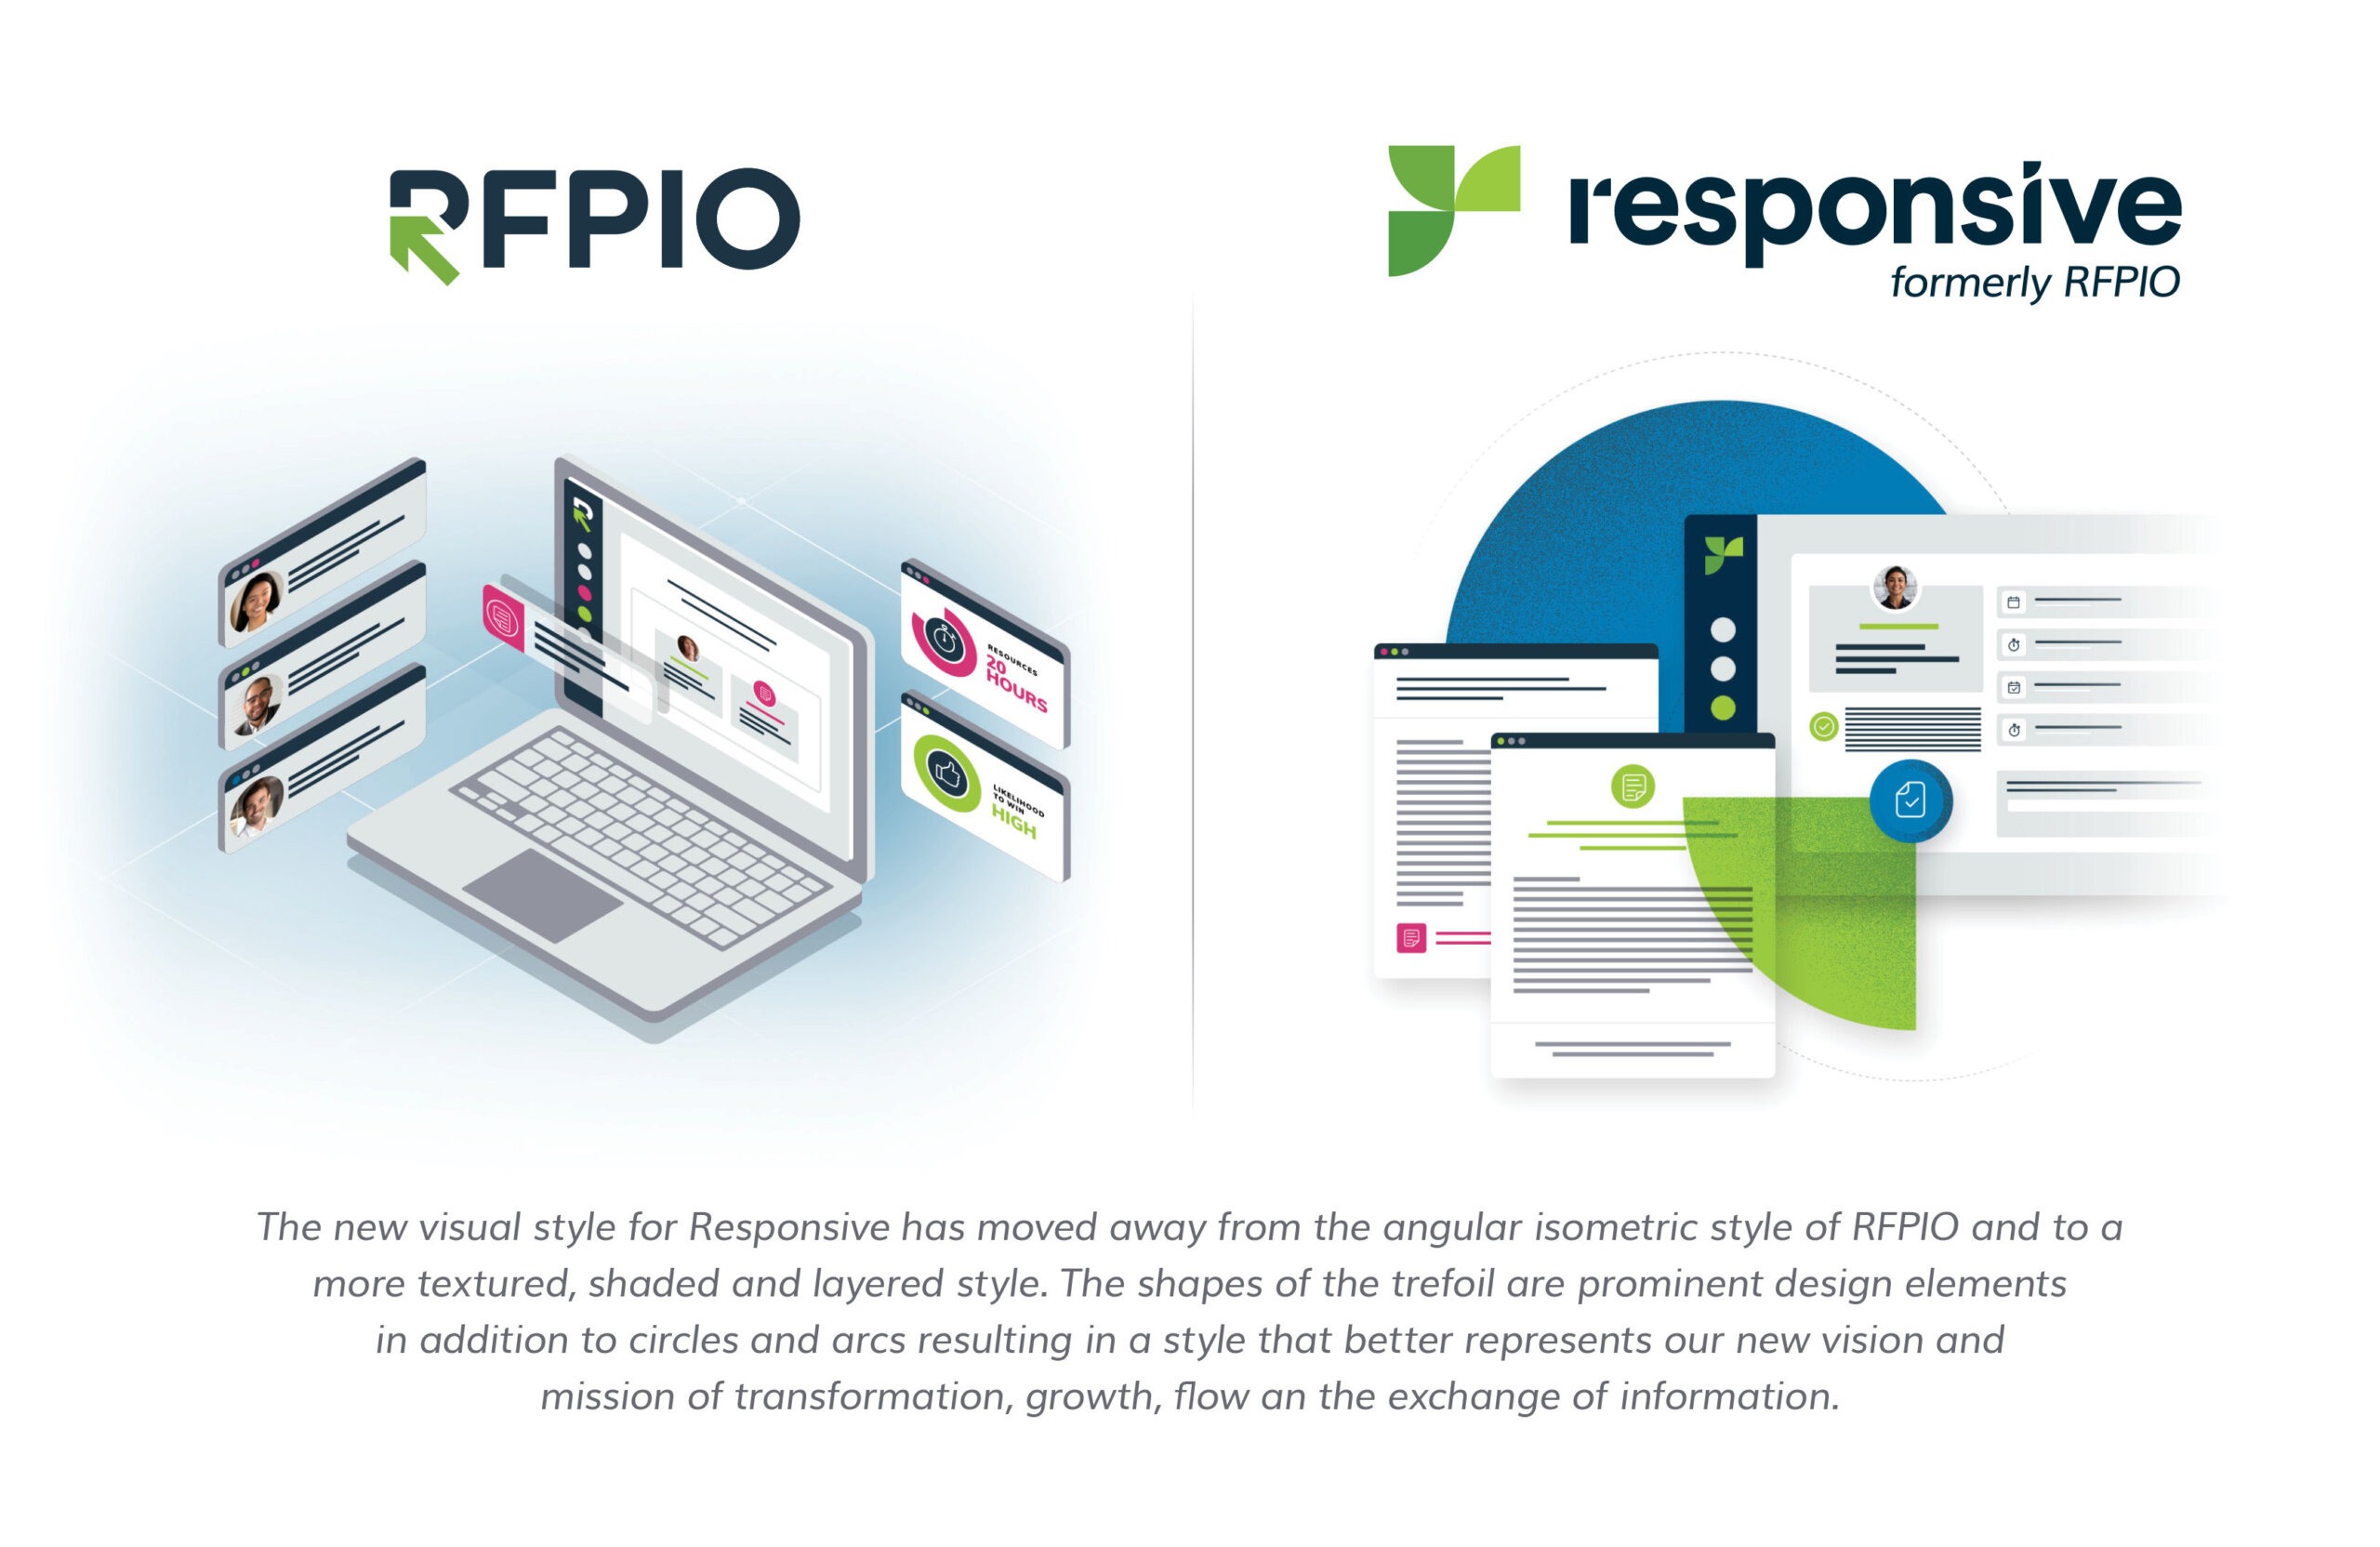 RFPIO is Responsive evolution story with platform illustration comparisons